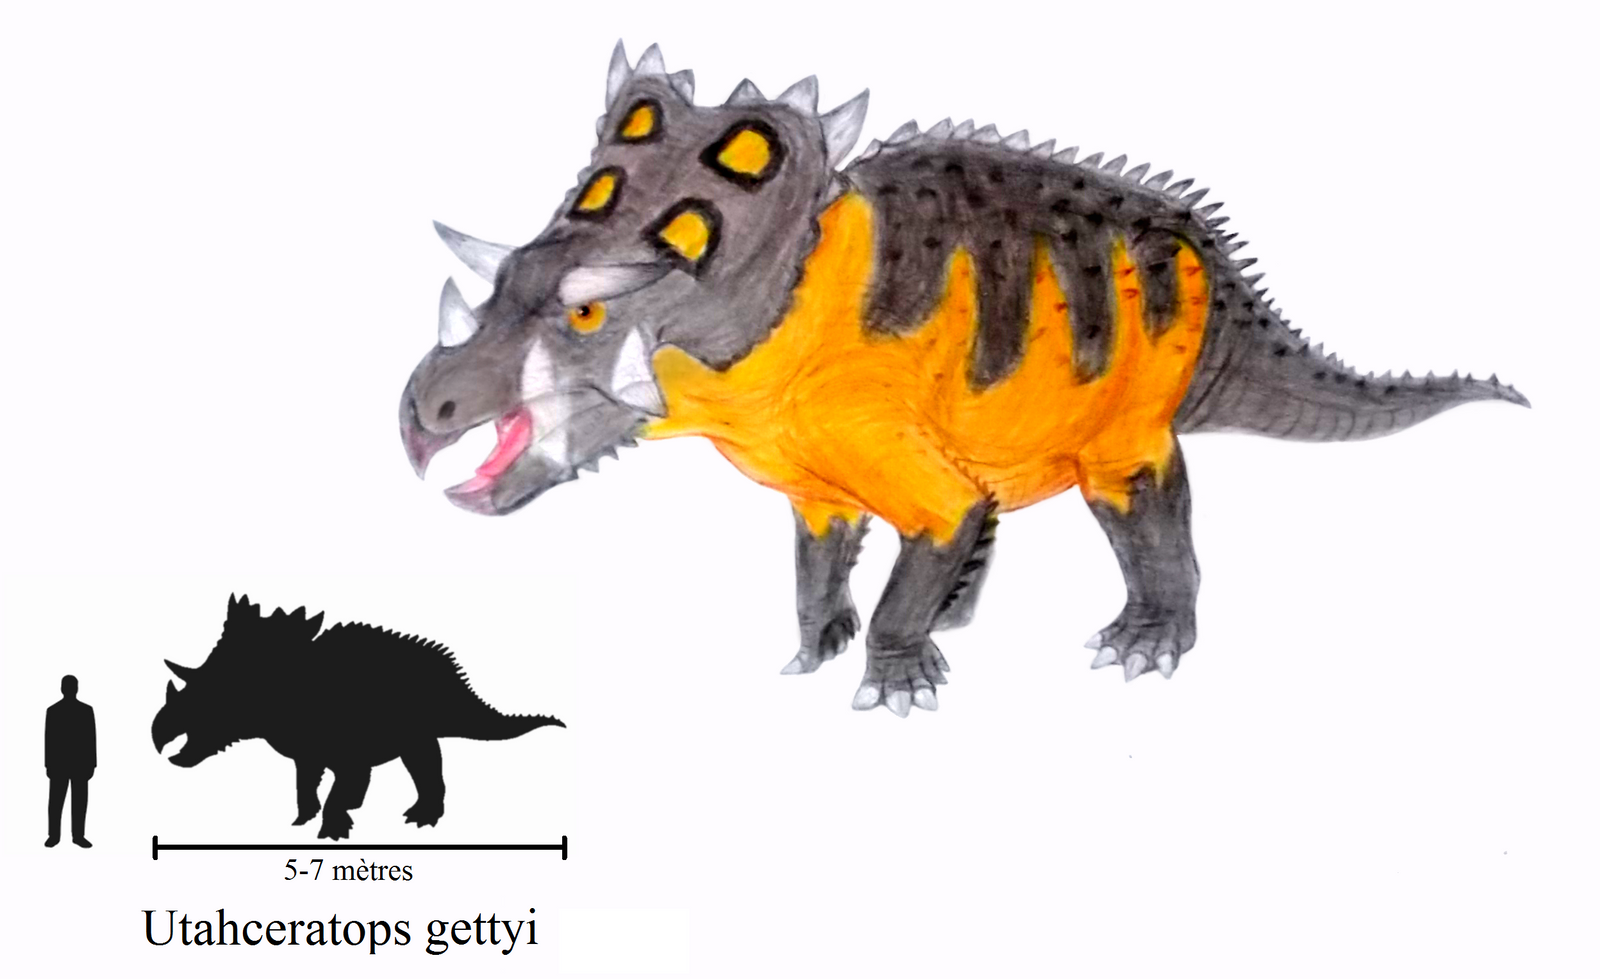 utahceratops_a_la_bastiodon_by_zewqt-d7xwzwi.png